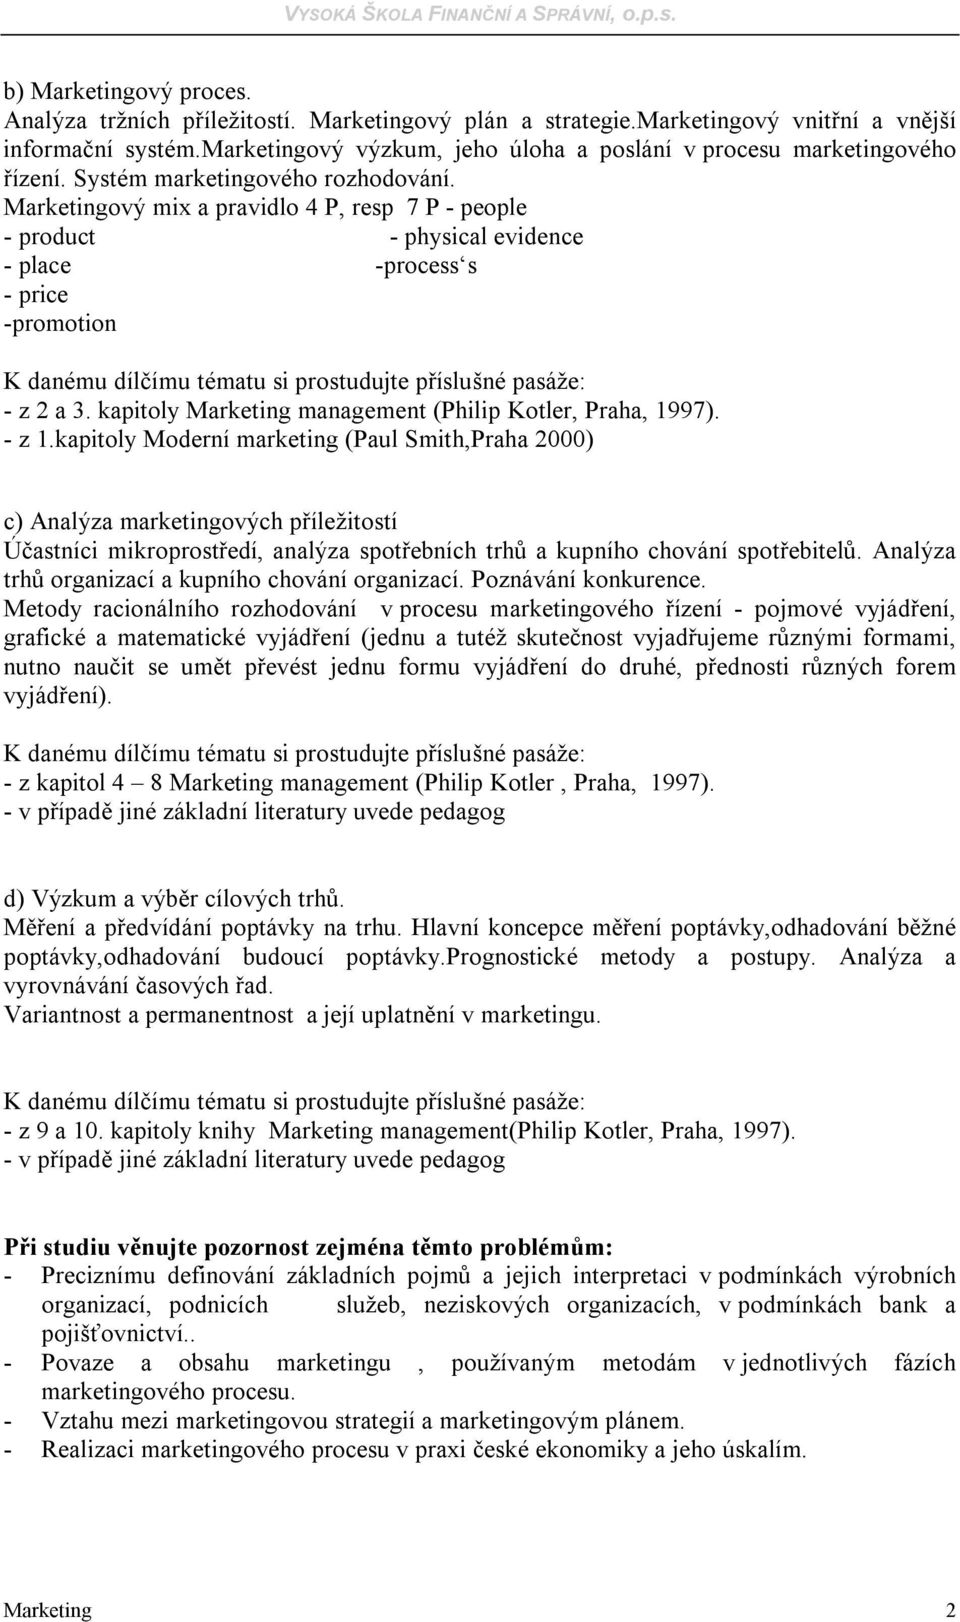 Marketingový mix a pravidlo 4 P, resp 7 P - people - product - physical evidence - place -process s - price -promotion - z 2 a 3. kapitoly Marketing management (Philip Kotler, Praha, 1997). - z 1.